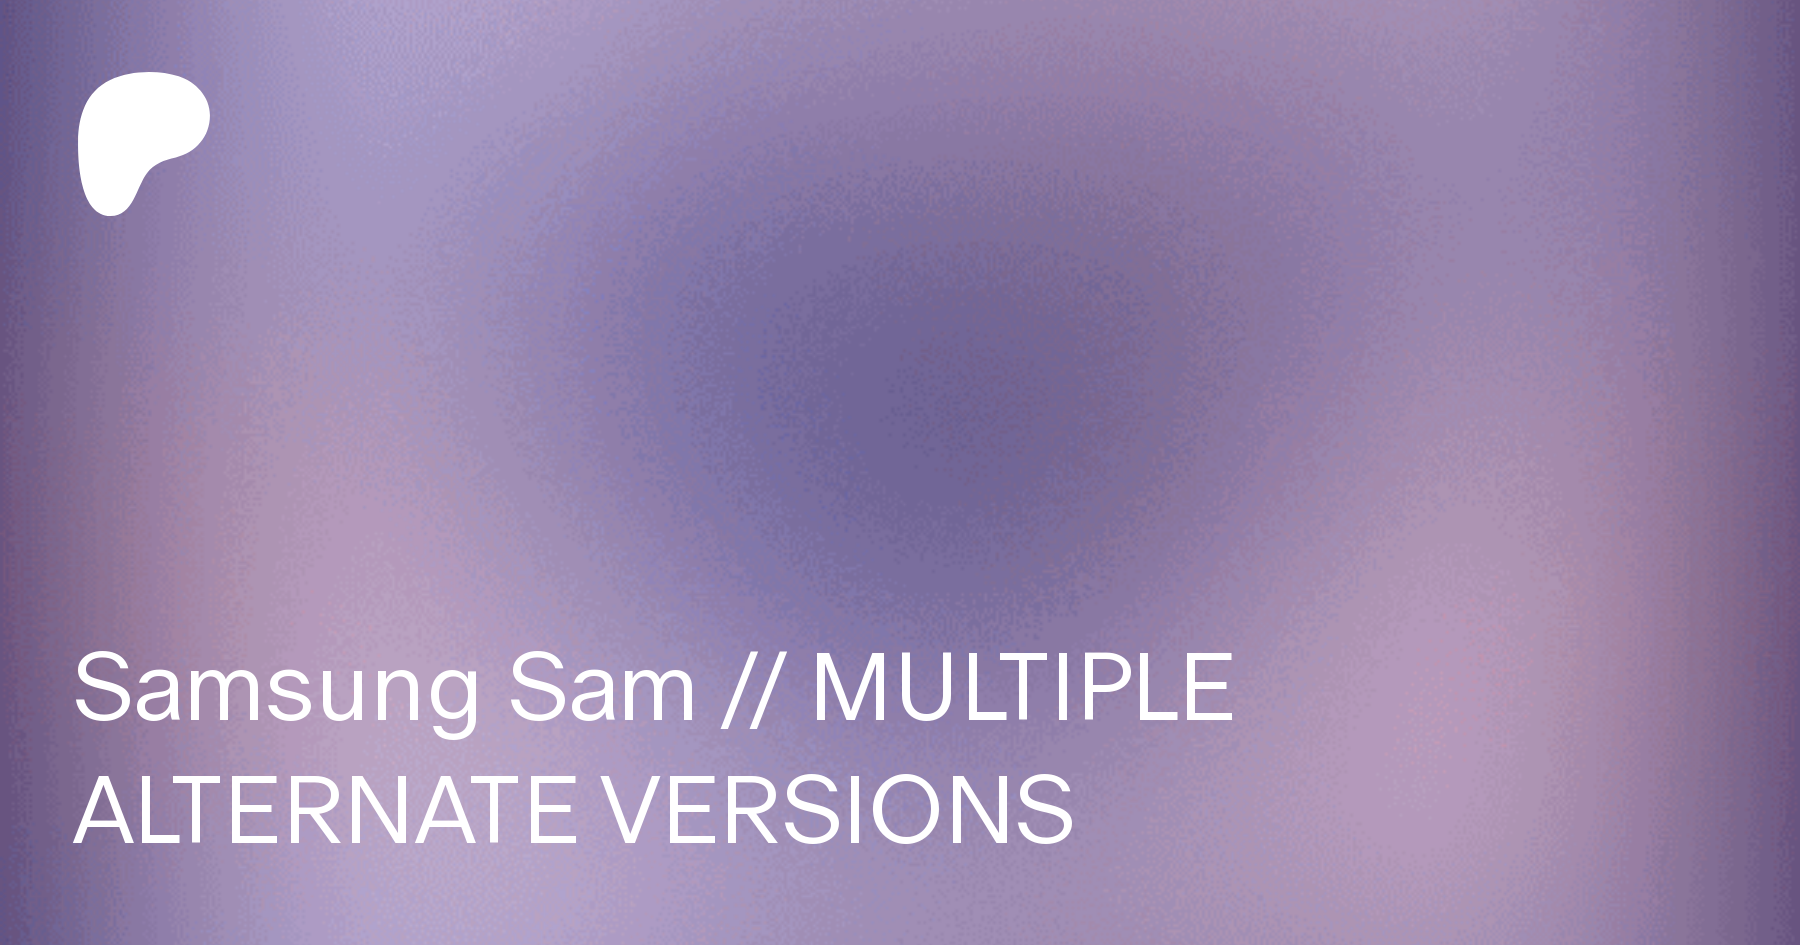 Patreon exclusive] Samsung Sam 1